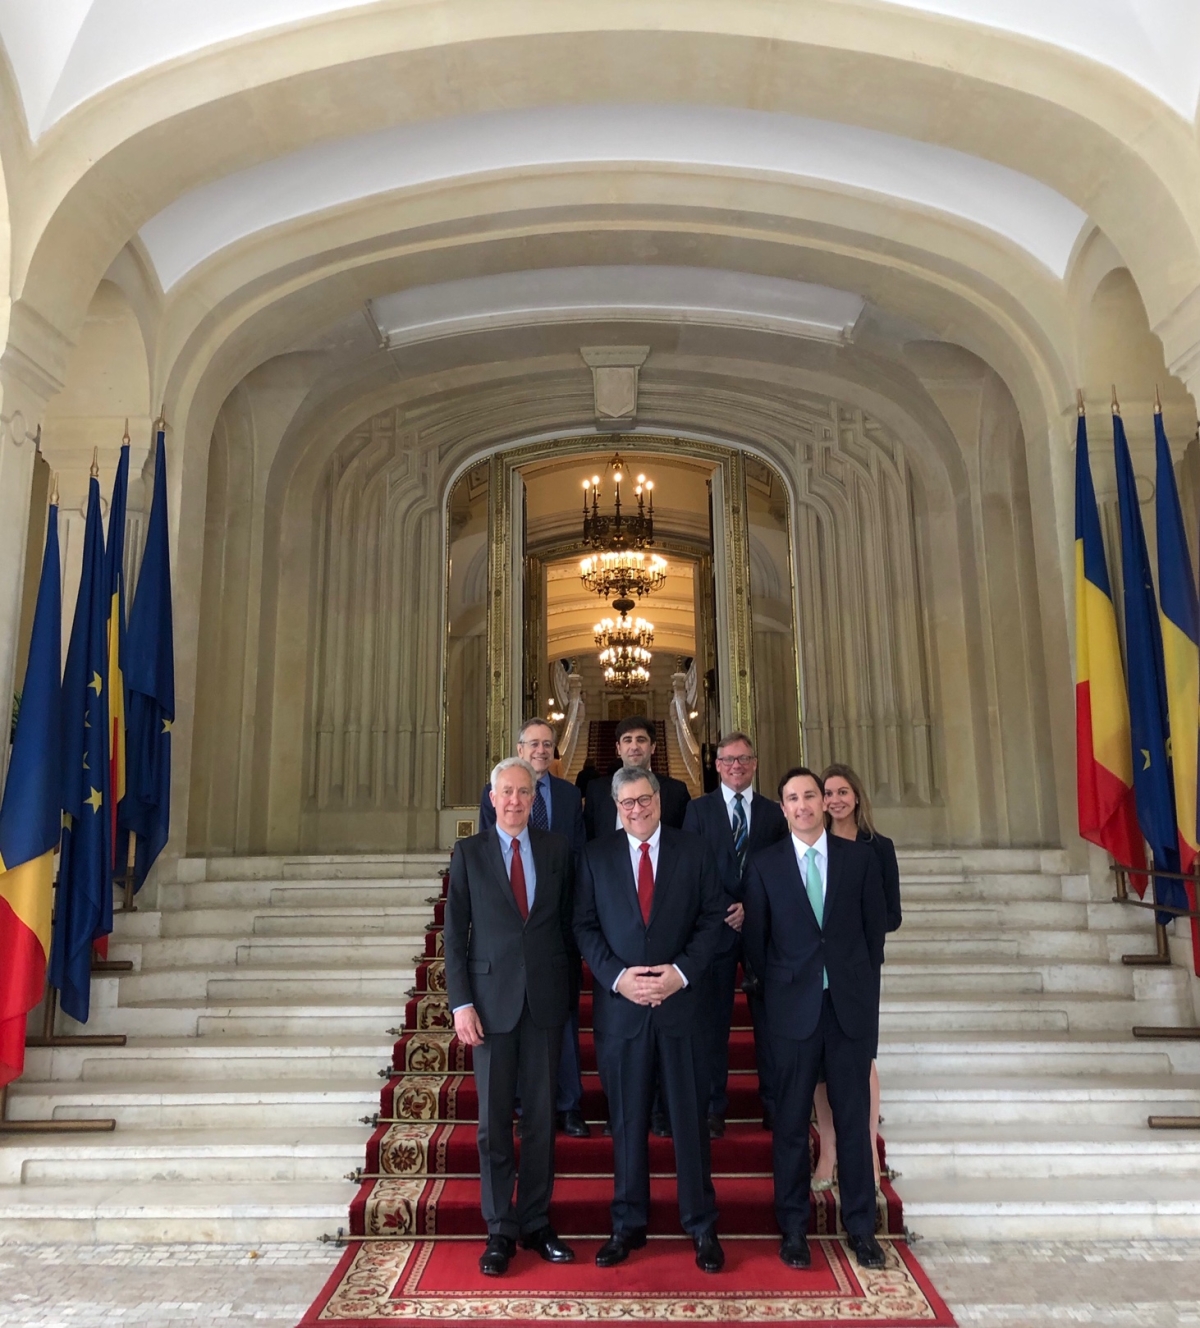 Attorney General Barr with Romanian Ambassador and DOJ staff